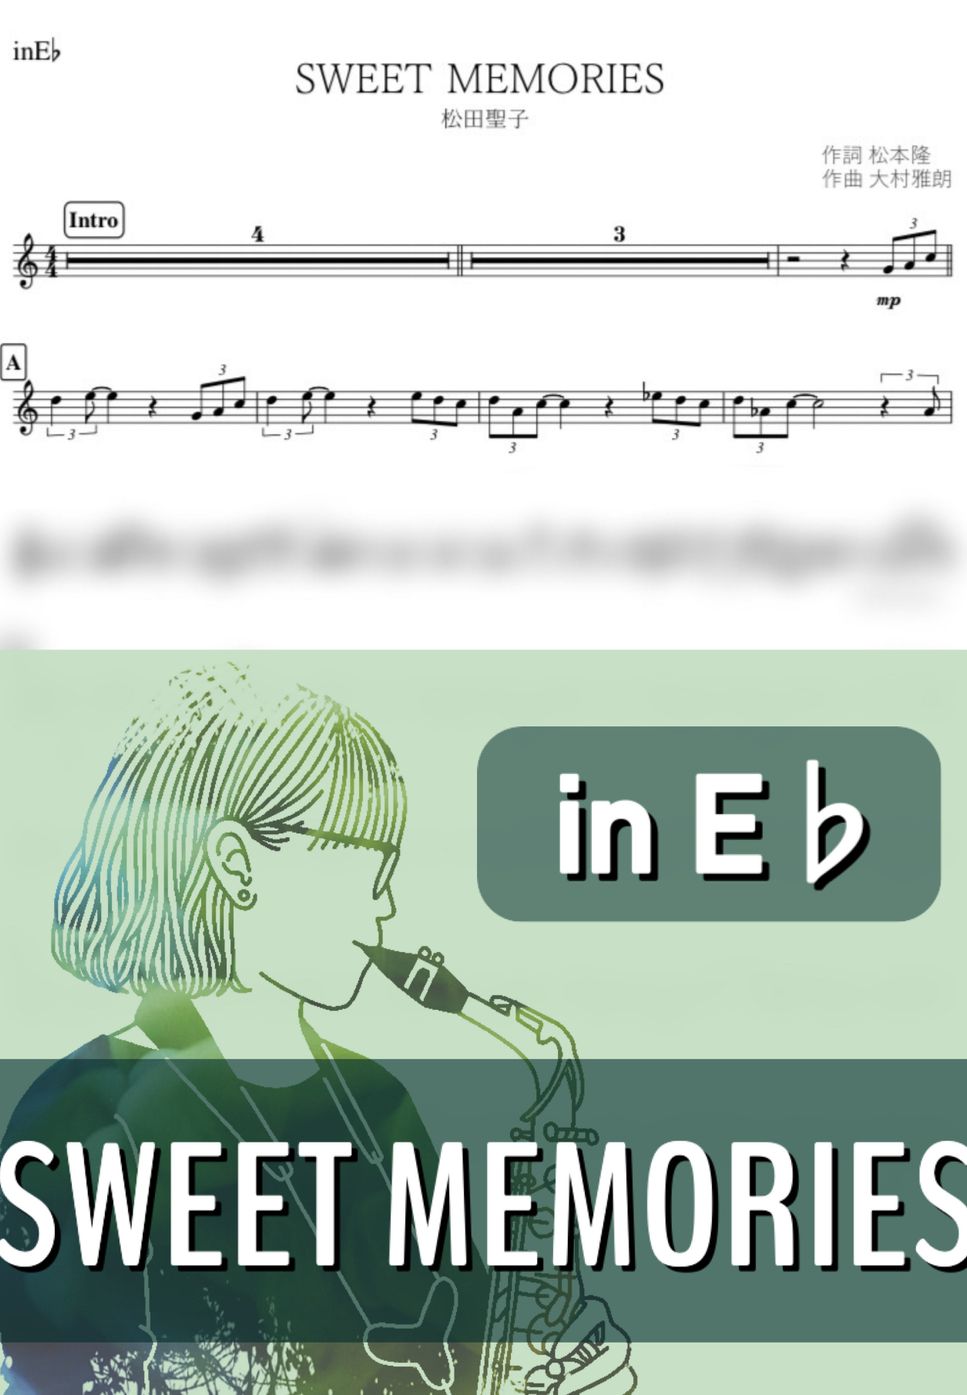 松田聖子 - SWEET MEMORIES (E♭) by kanamusic